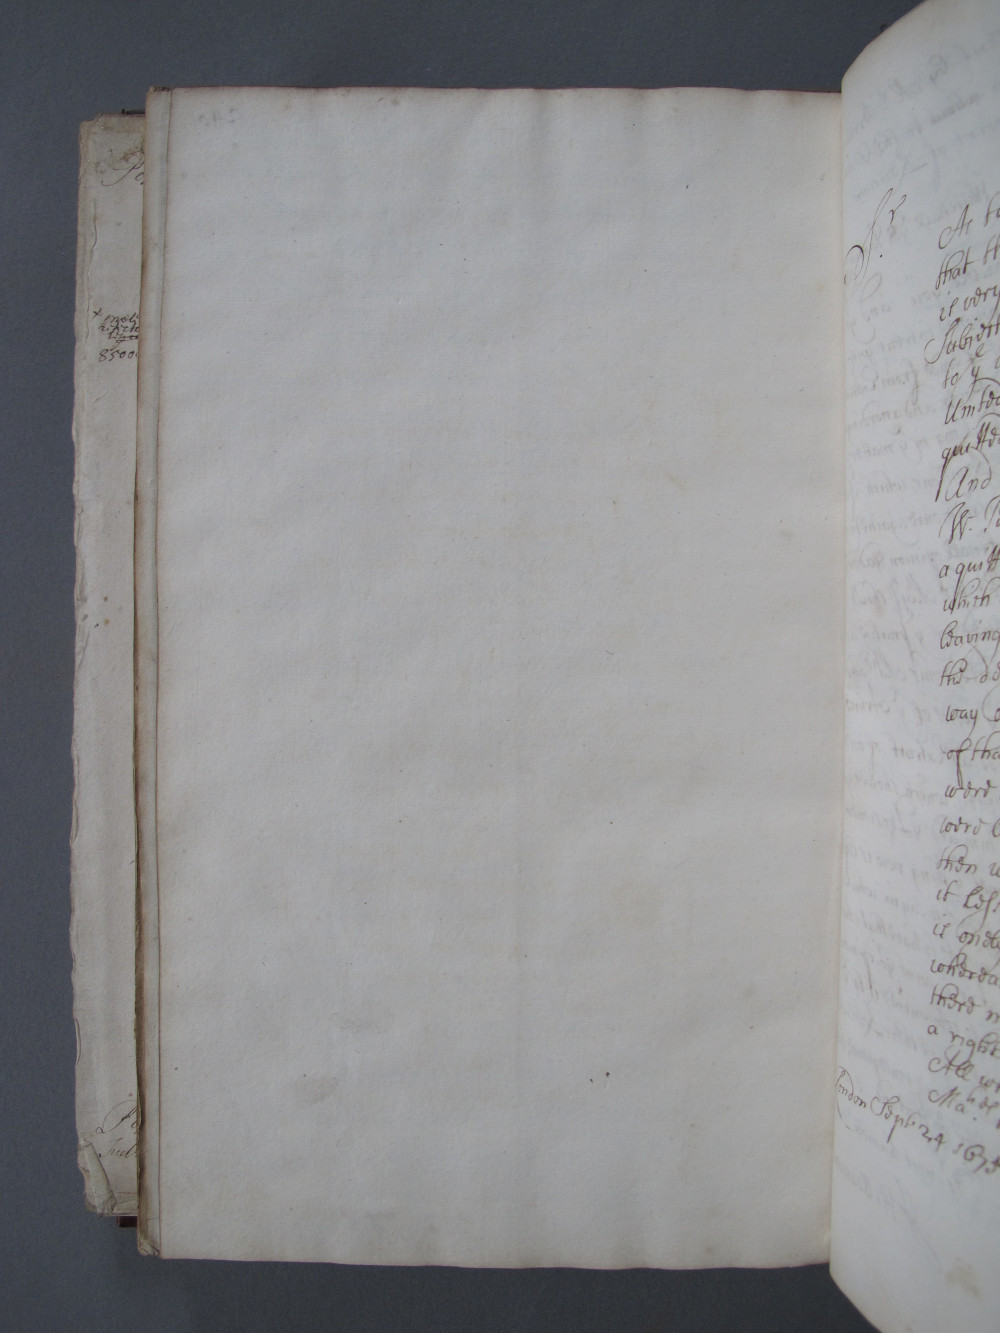 Folio 240 verso